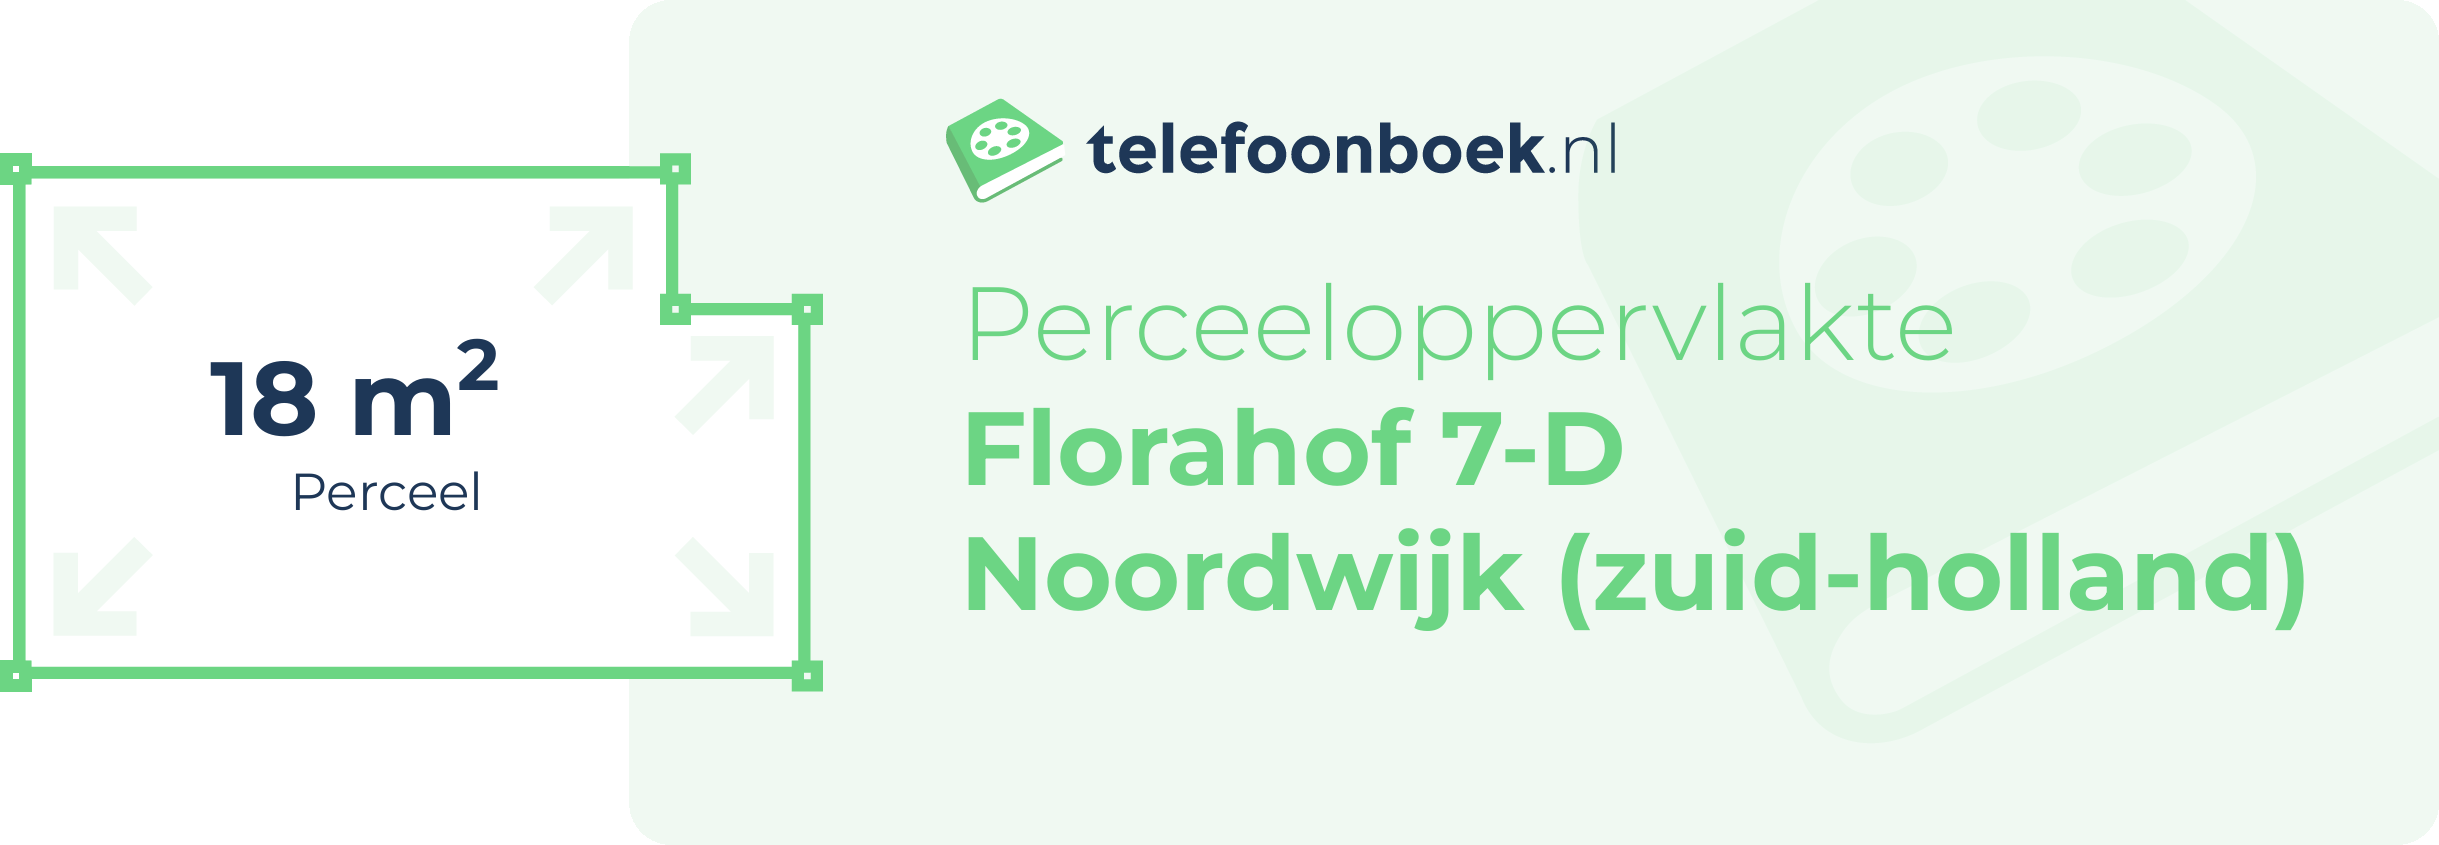 Perceeloppervlakte Florahof 7-D Noordwijk (Zuid-Holland)